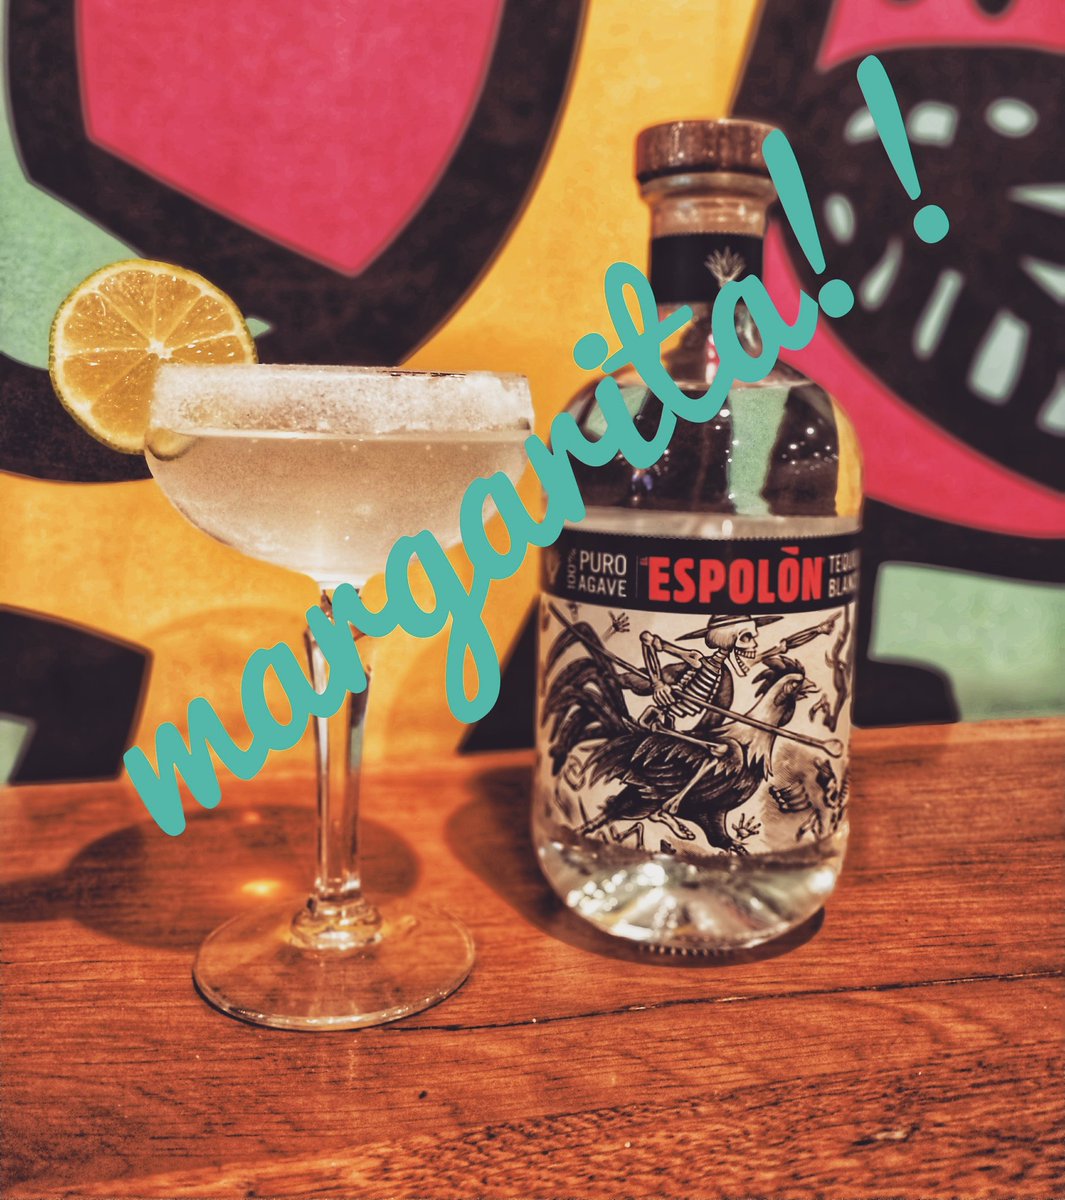 Current mood: Margarita. 
How do you like your rim? #salty #margarita #tequila #espolontequila #fridayfeels #fridaynightsesh #tgif #stayclassy #vegan #cocktails #drinkme #margaritaville #happyjuice #veganuary